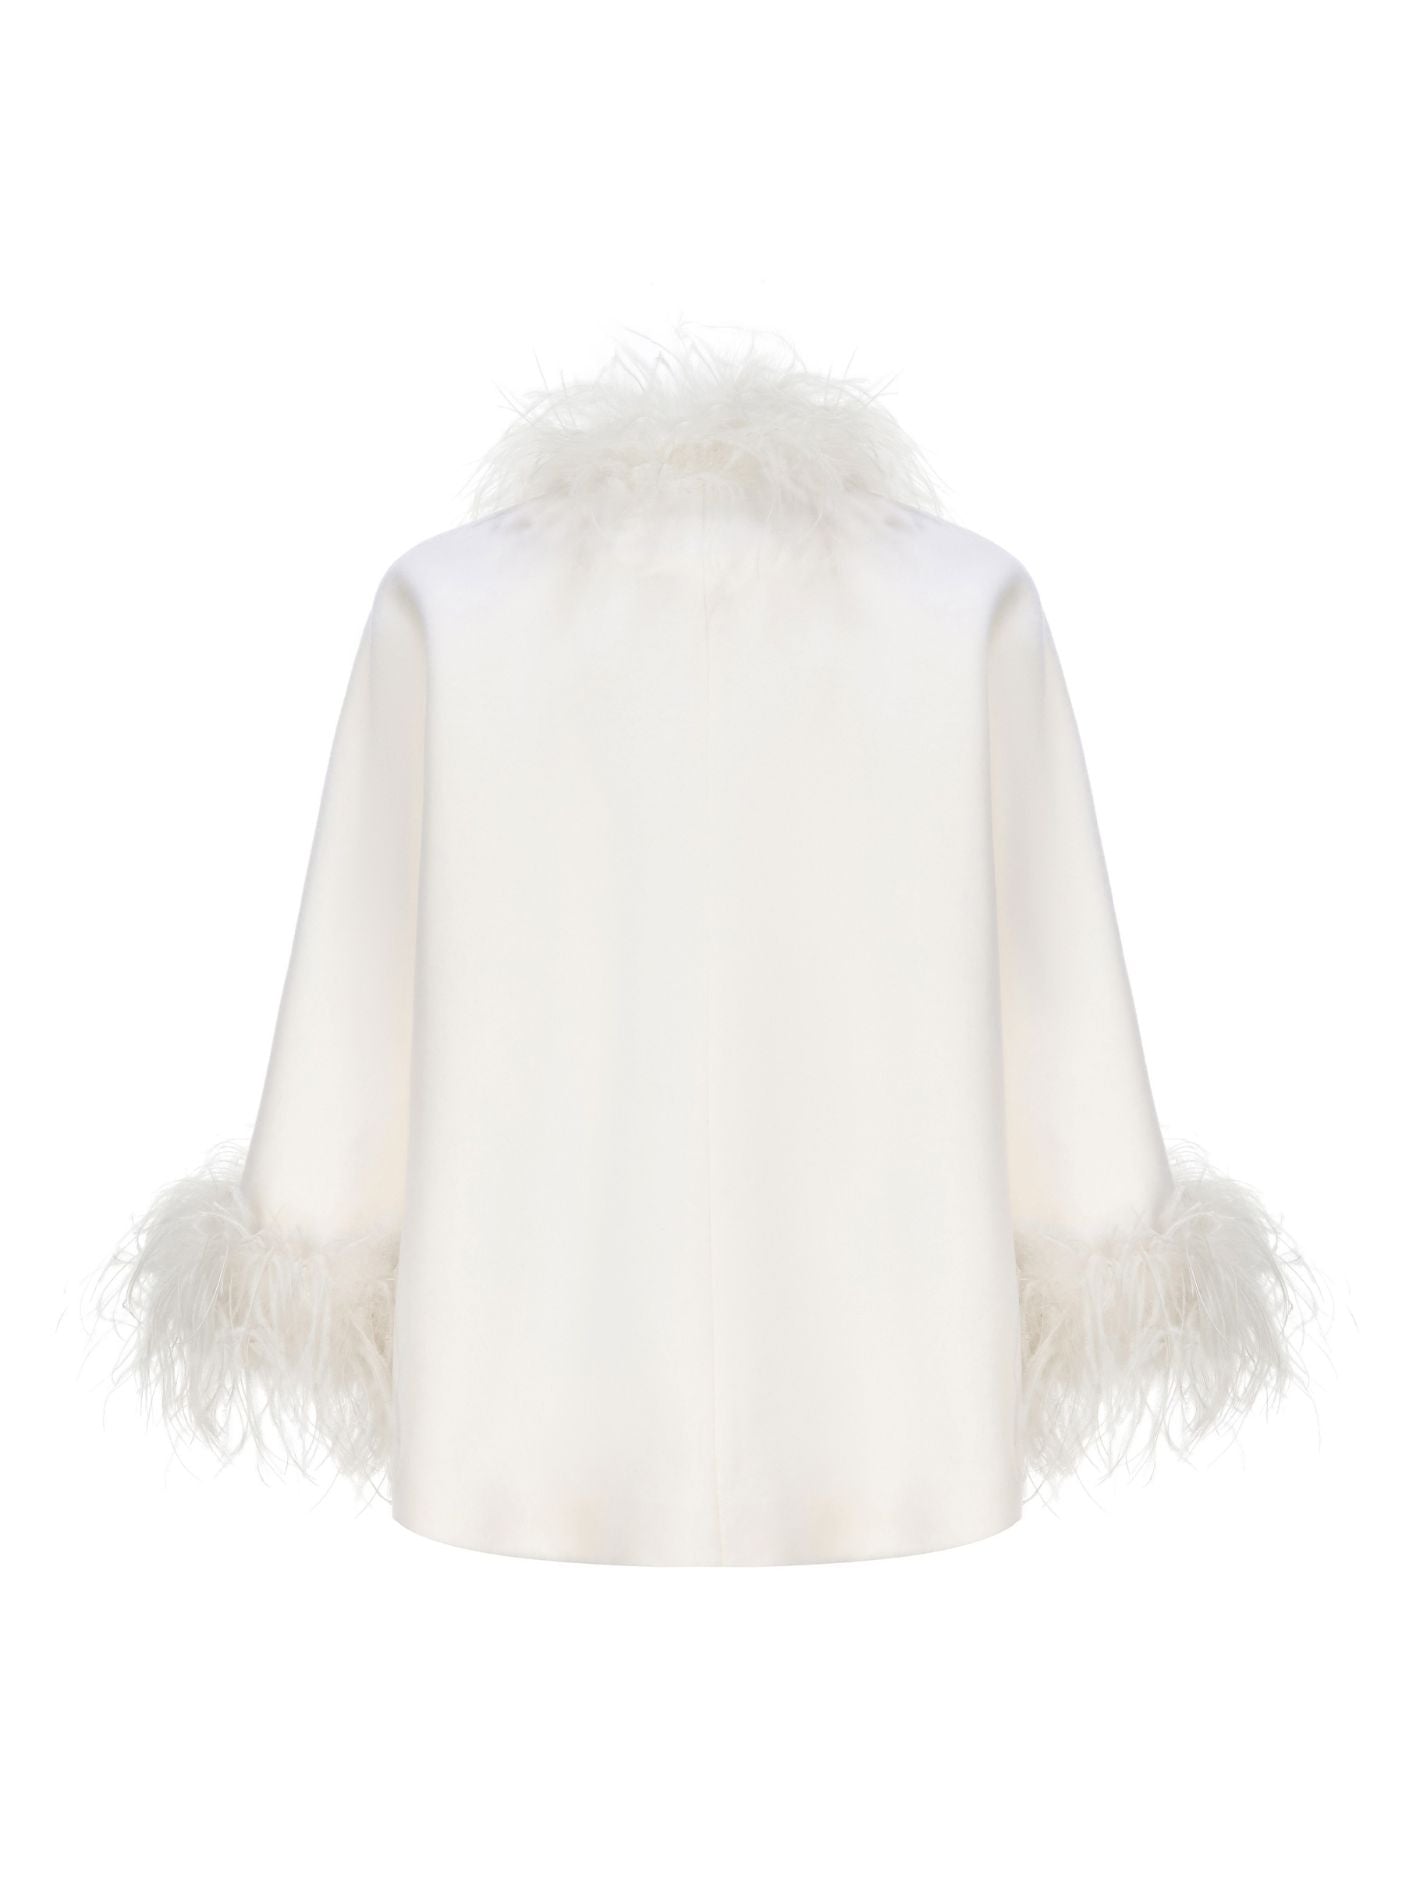 Angelica Feather Coat (White)